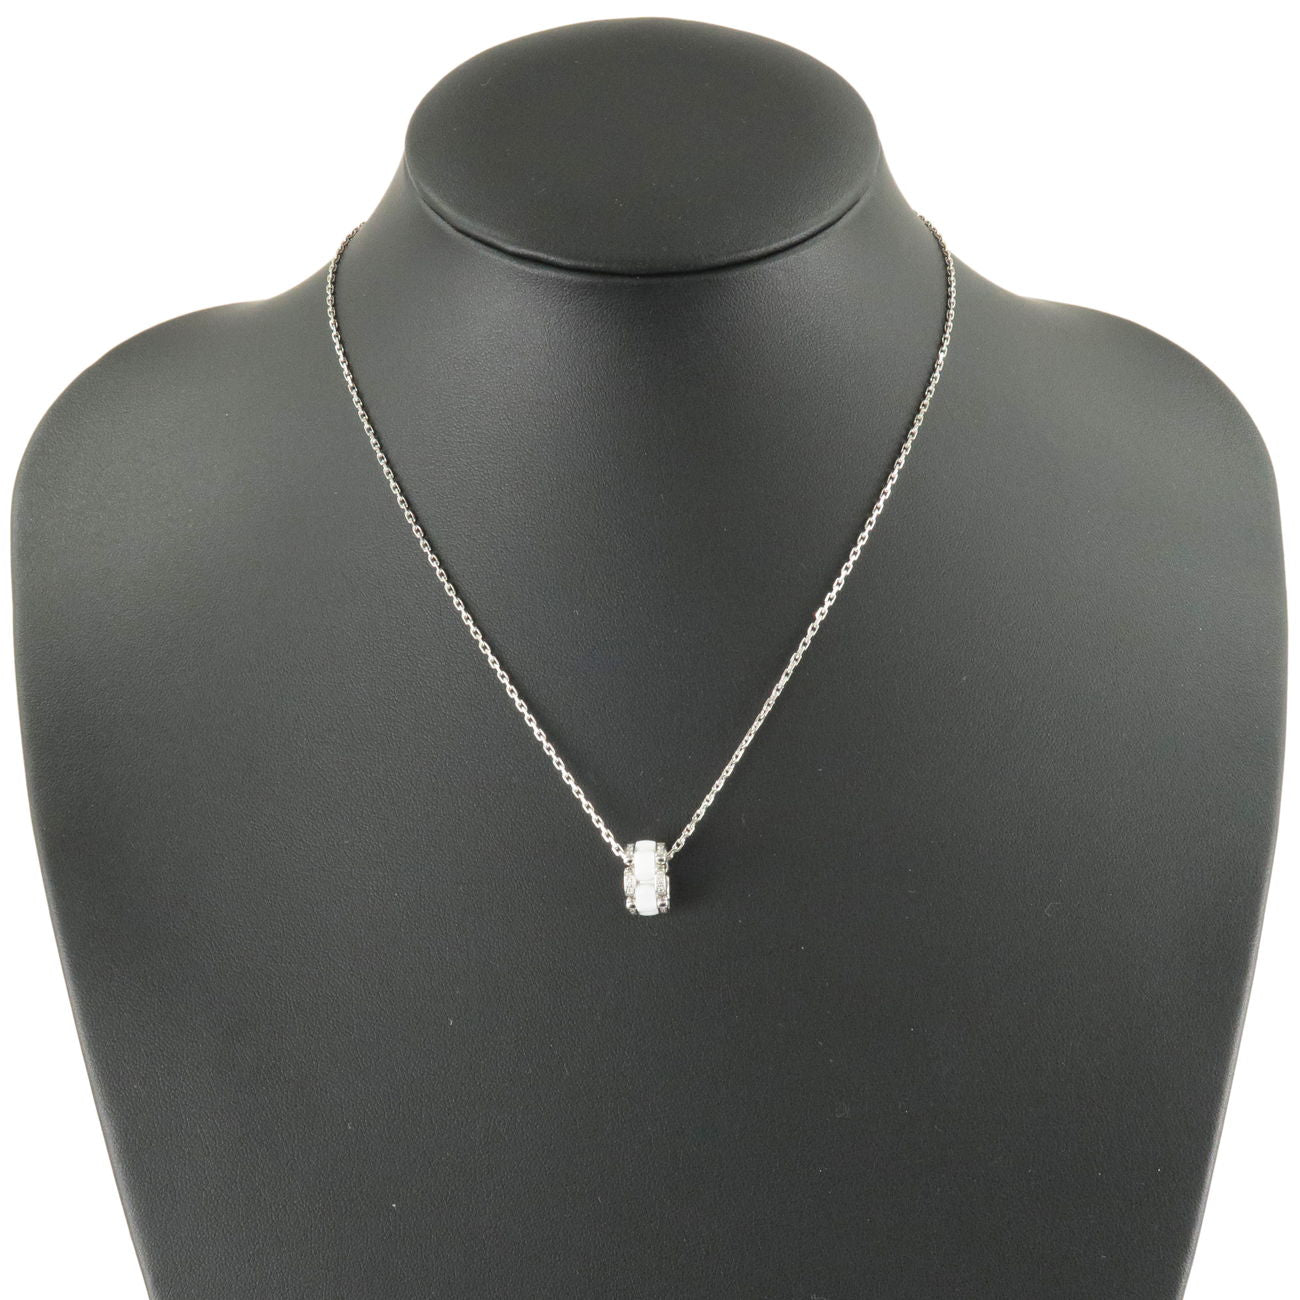 CHANEL Ultra Collection Diamond Necklace K18WG White Ceramic